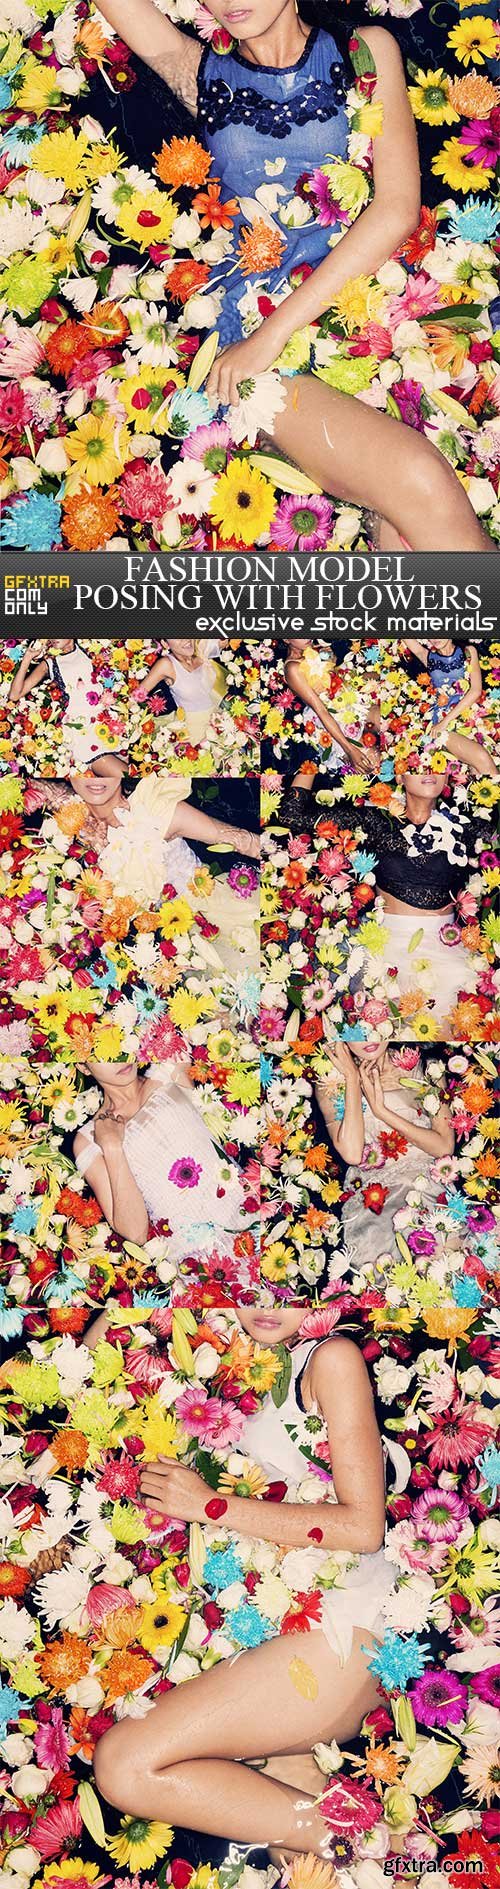 Fashion model posing with flowers, 9 x UHQ JPEG